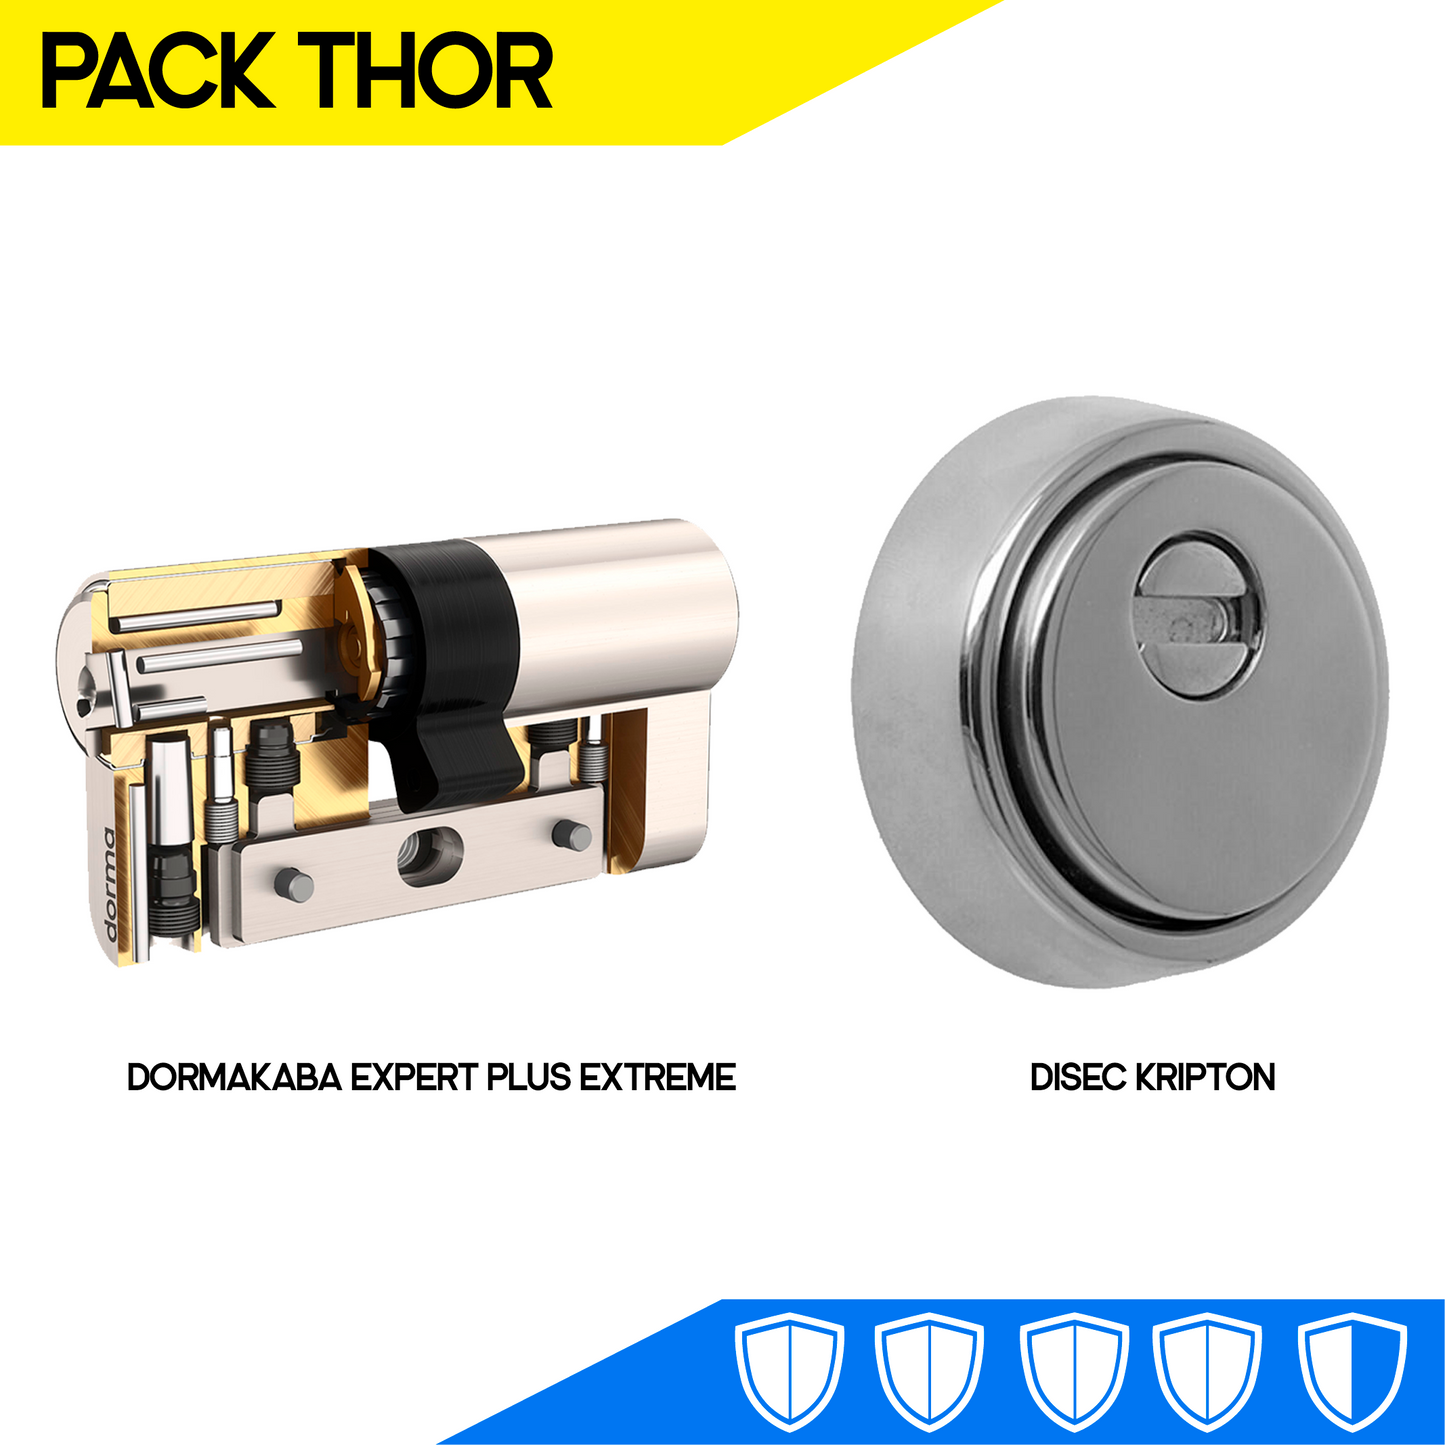 Pack de seguridad Thor (Kaba Expert Plus Extreme + Disec Kripton)